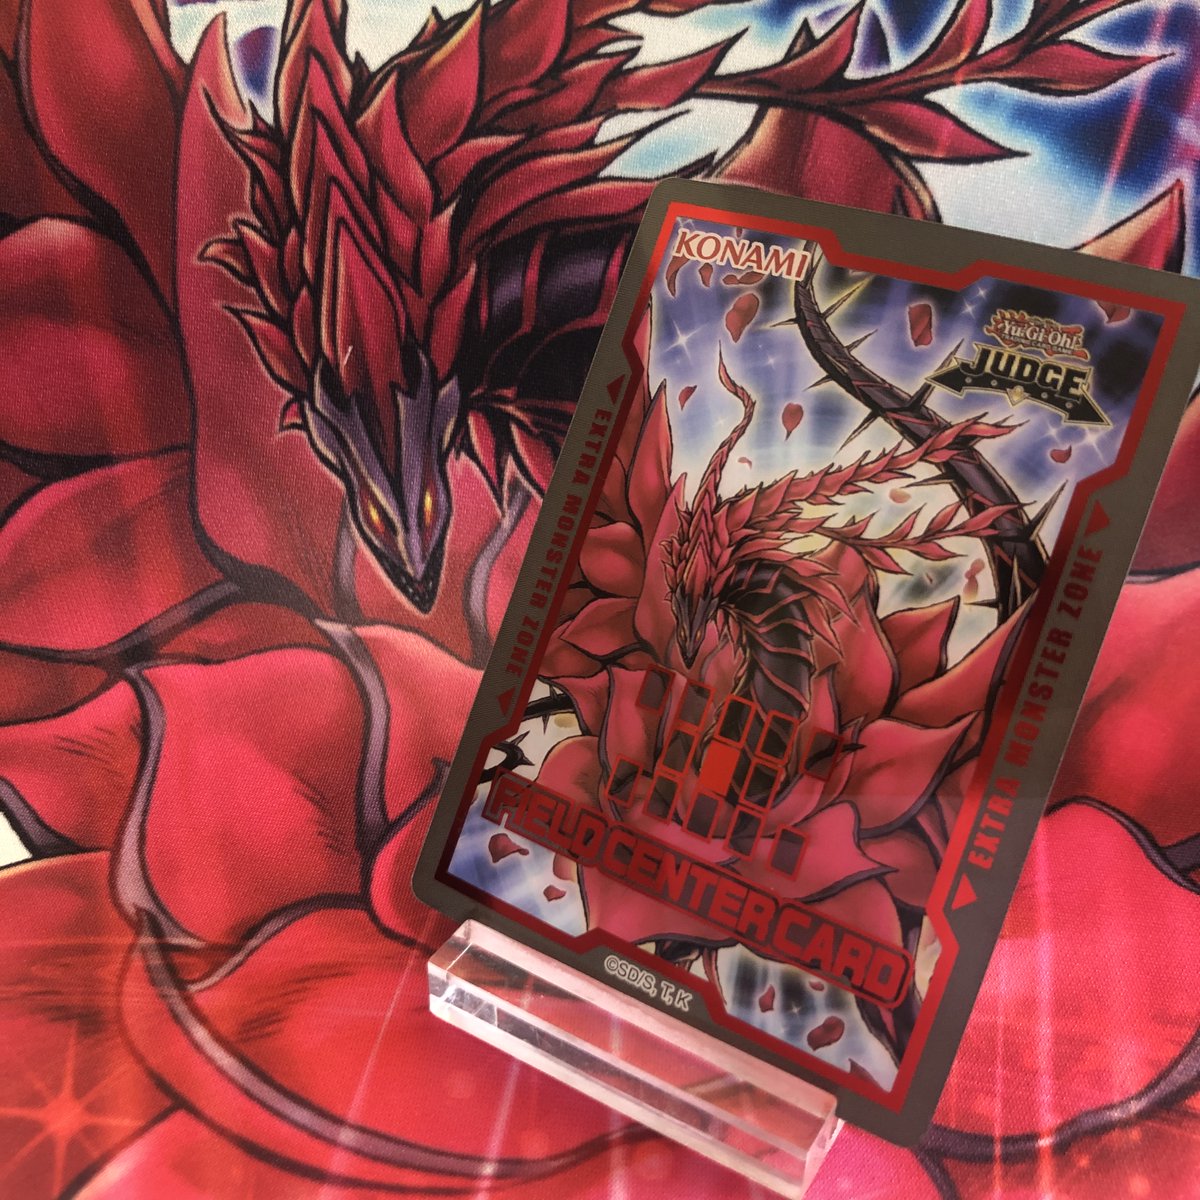 Judge Exclusive Reward! Black Rose Dragon returns from the 2015 Akiza Judge Rewa... VSTCG